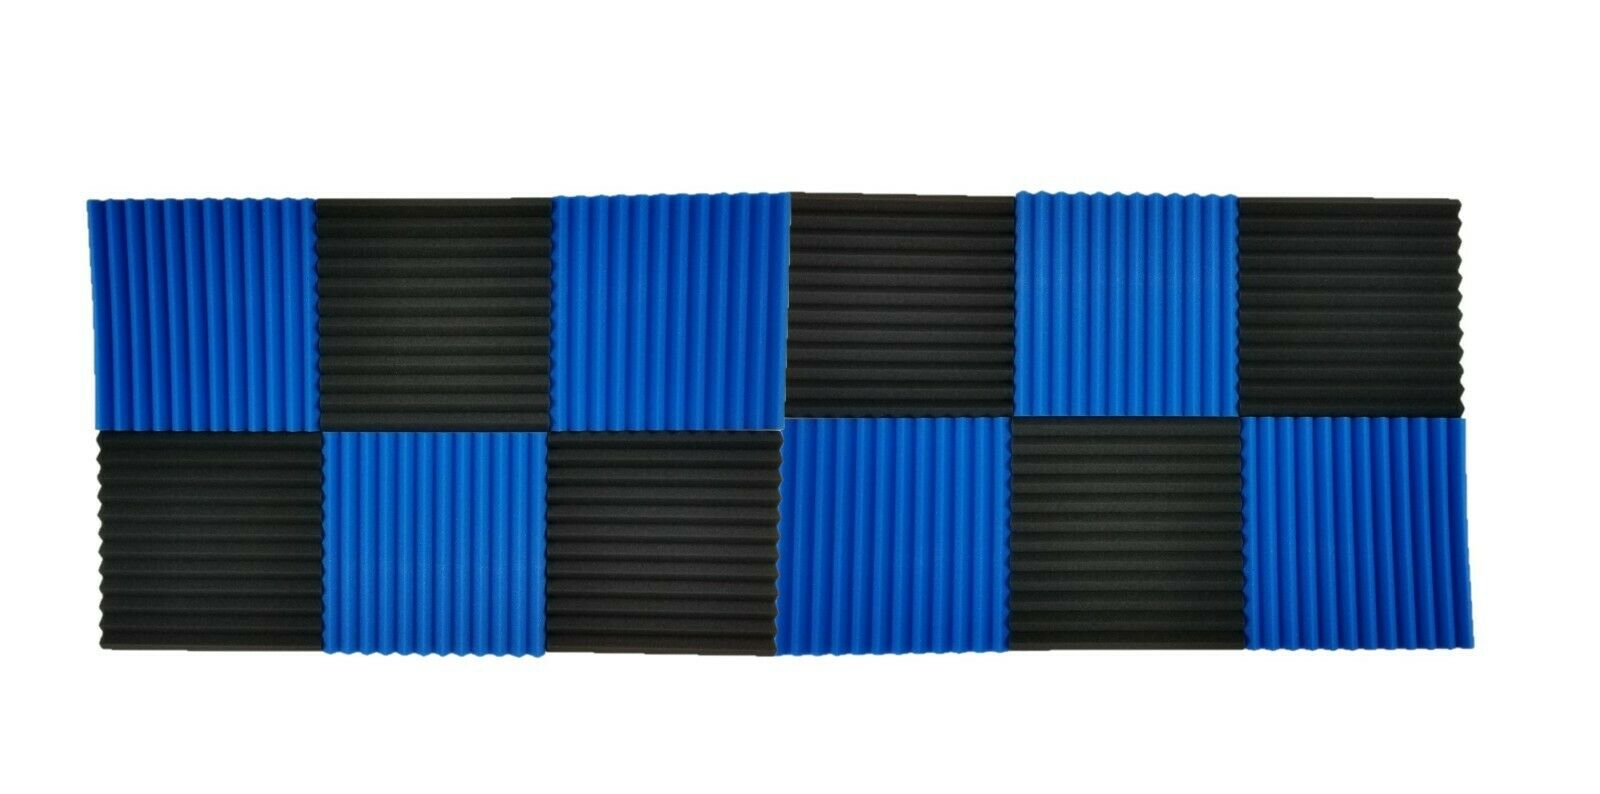 12 Pcs Black And Blue Acoustic Foam Panel Tile Wall Studio Sound Proof 12x12x1